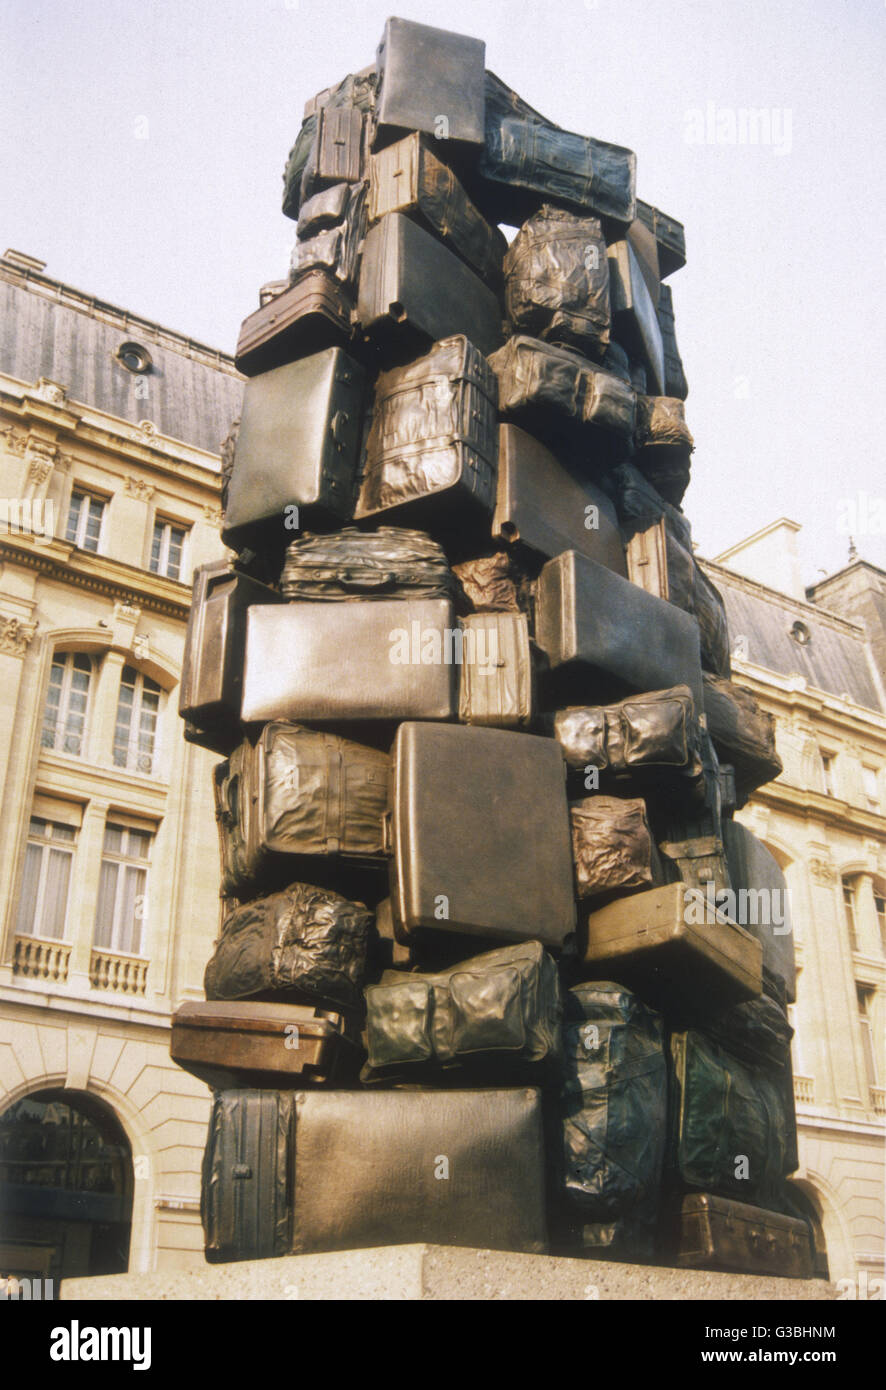 This imaginative sculpture  adorns the courtyard of the  Gare Saint-Lazare, Paris.        Date: 1985 Stock Photo